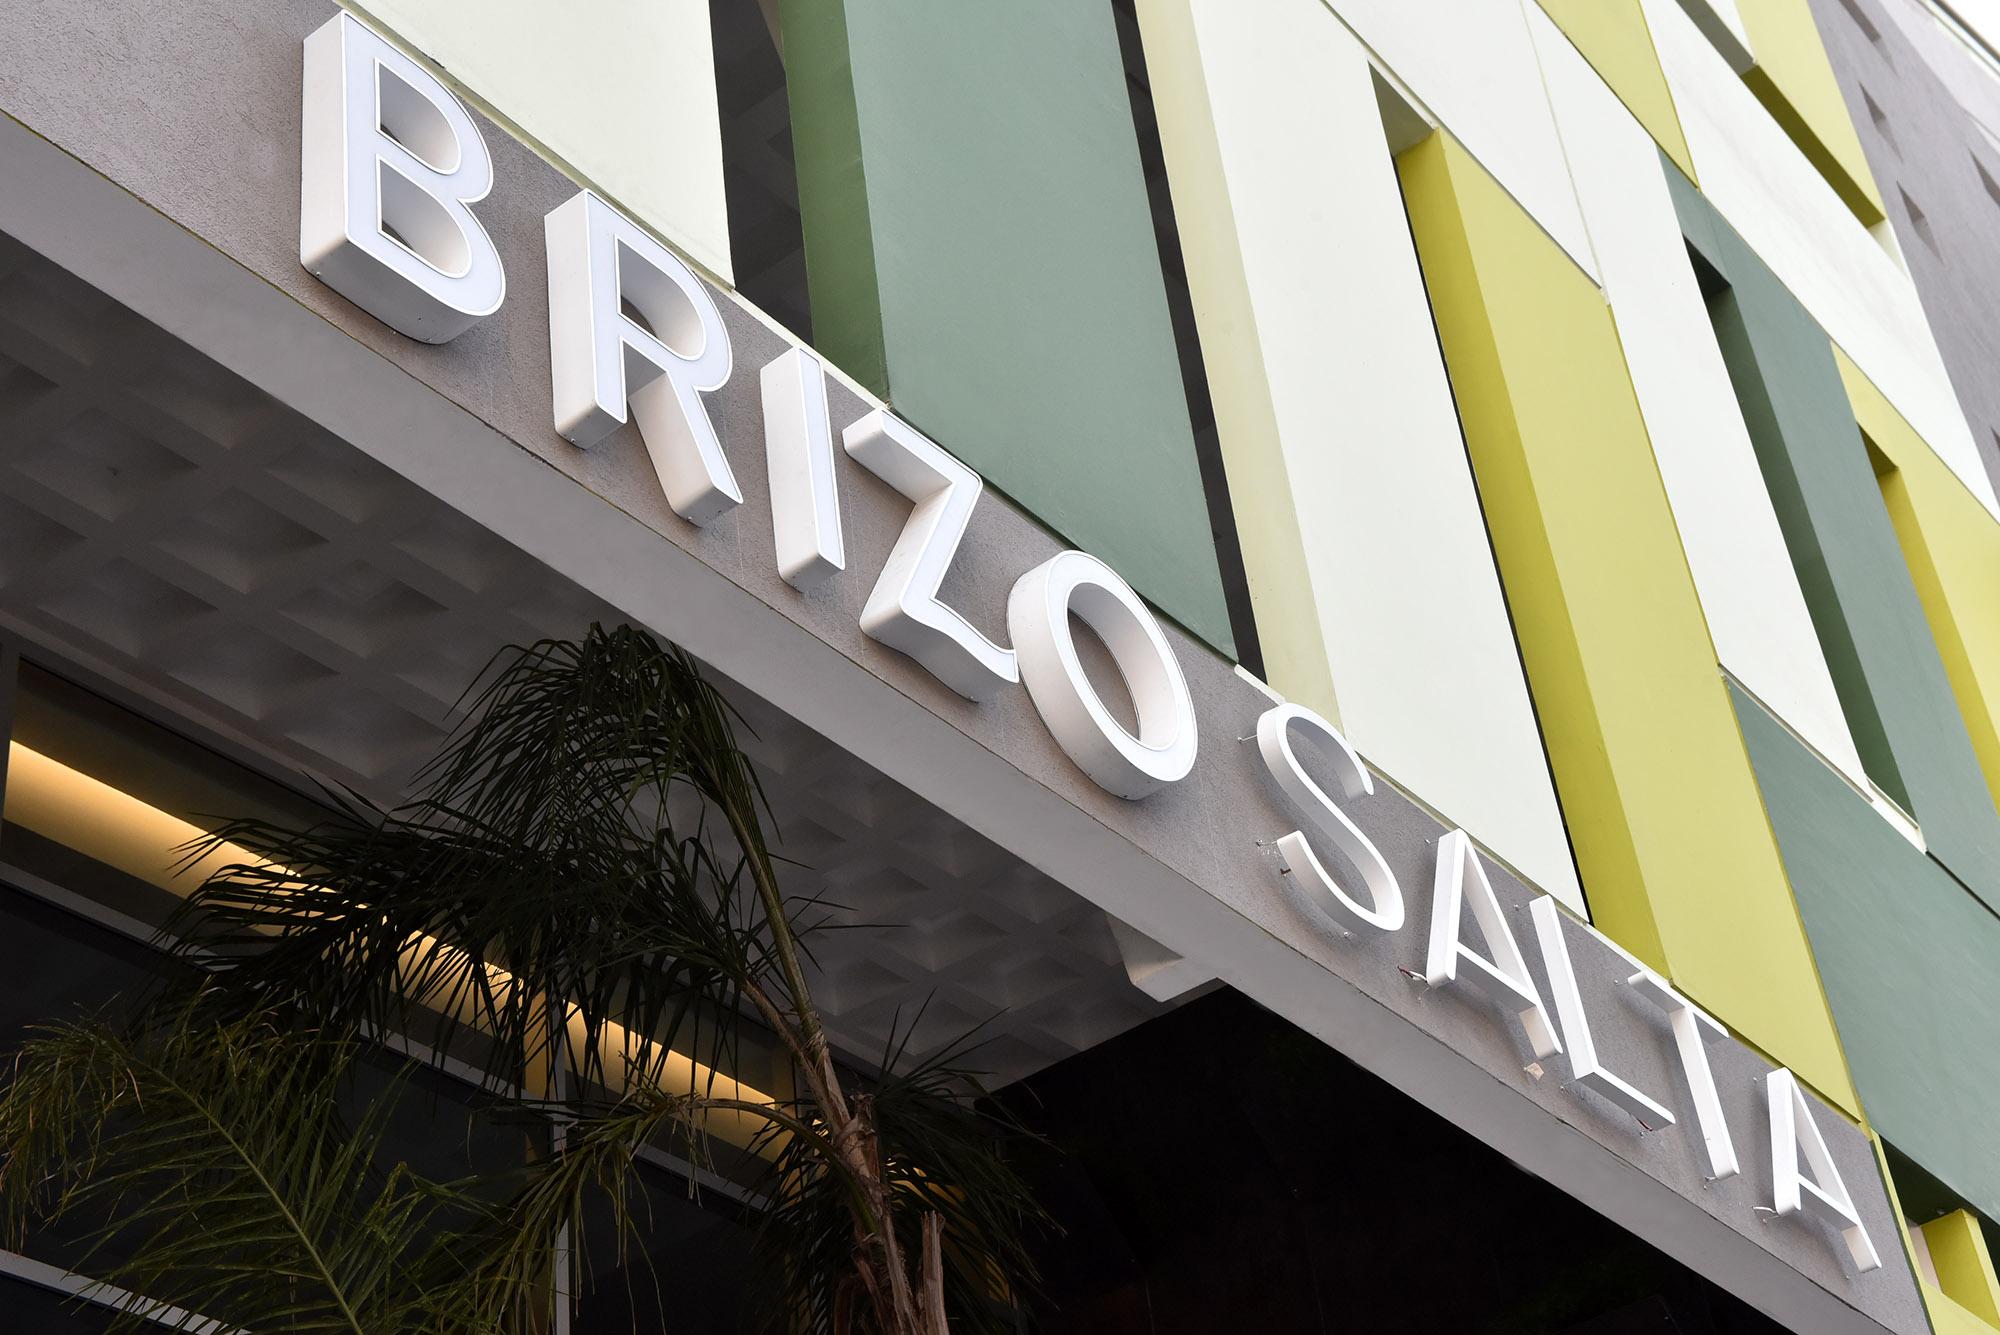 Brizo Salta酒店 外观 照片